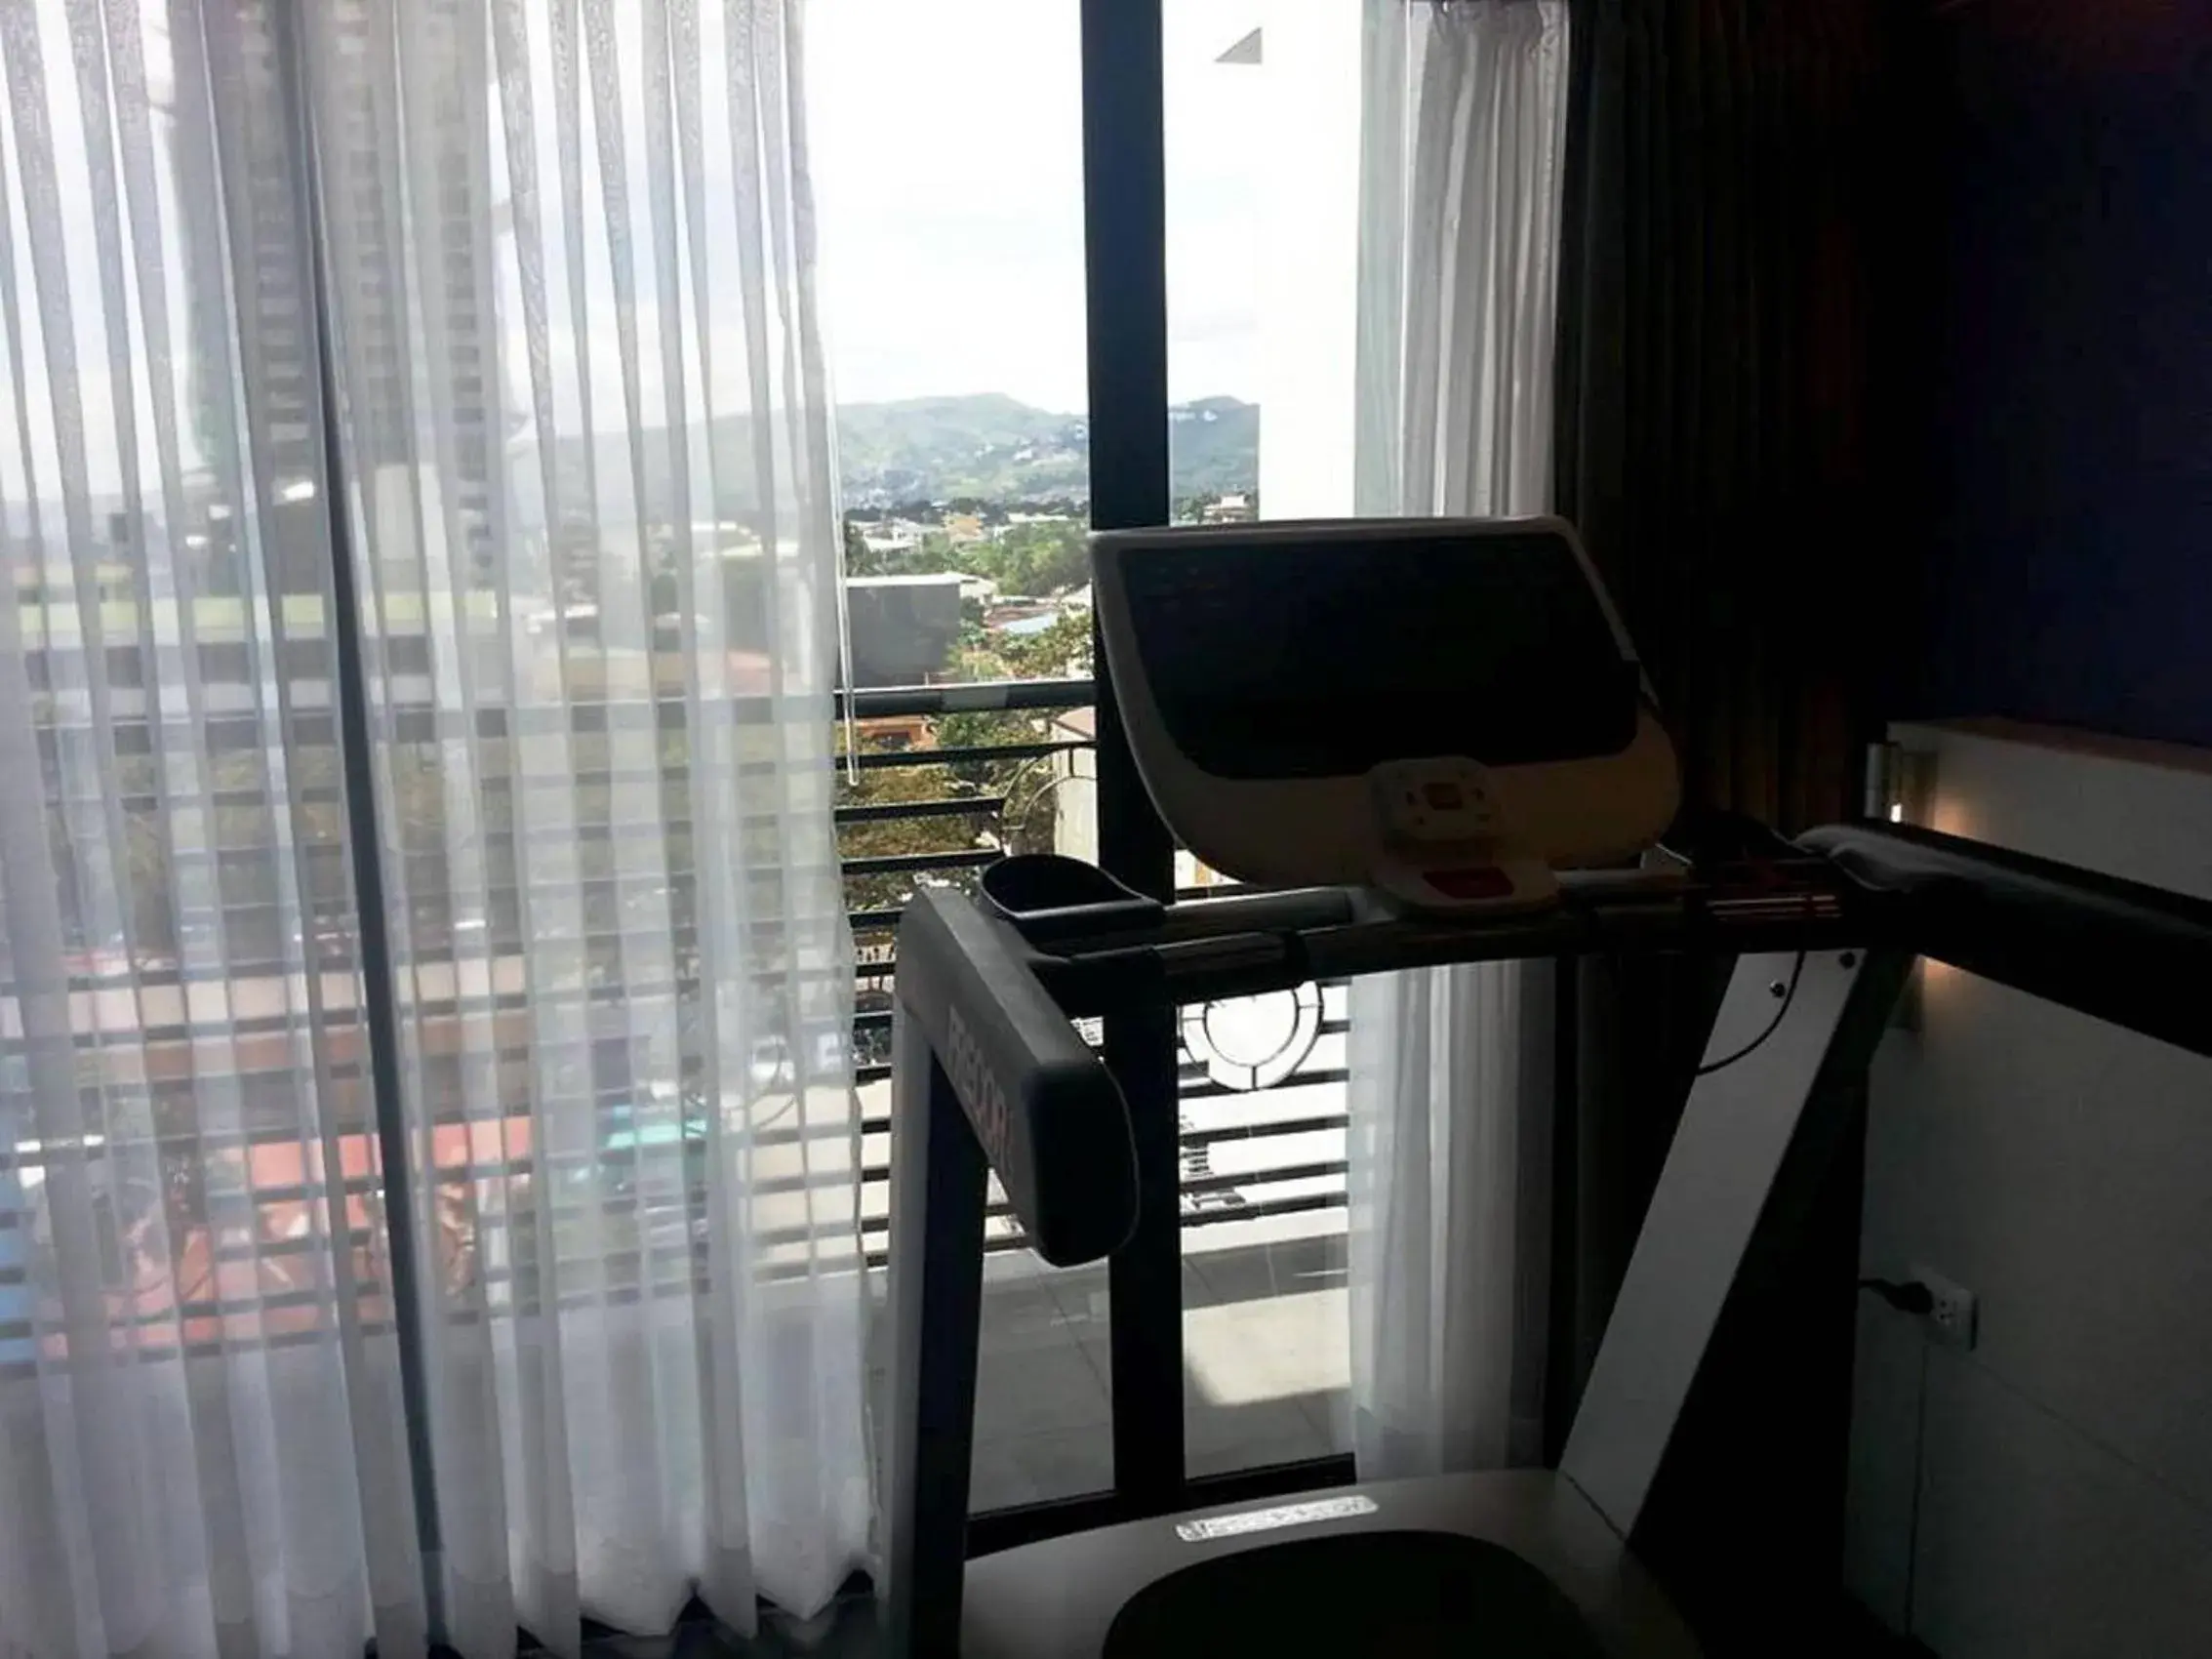 Fitness centre/facilities, TV/Entertainment Center in Pillows Hotel Cebu